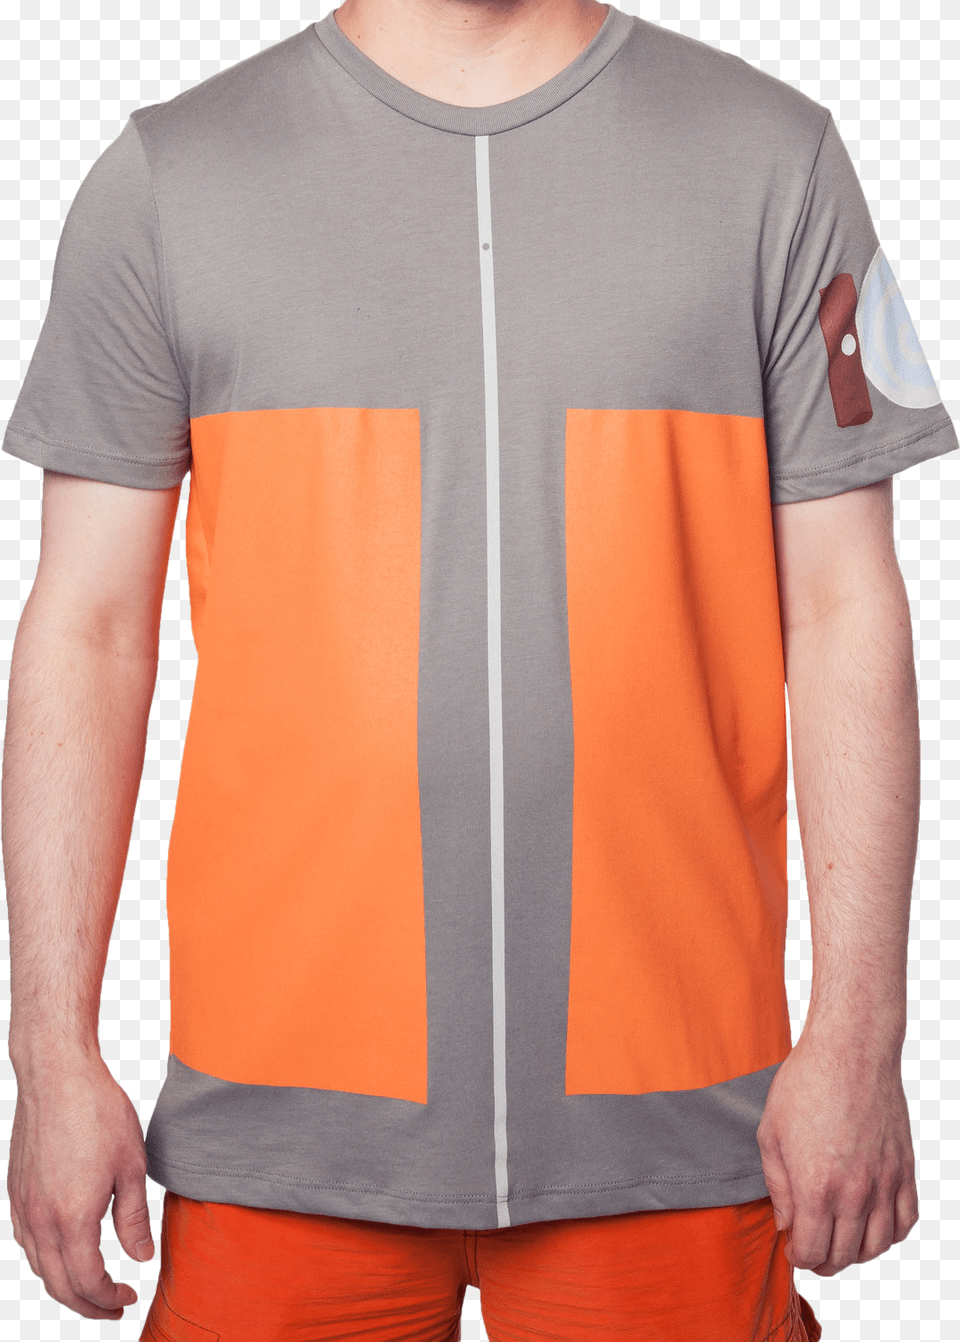 Naruto Costume Shirt Active Shirt, Clothing, T-shirt, Vest Png Image